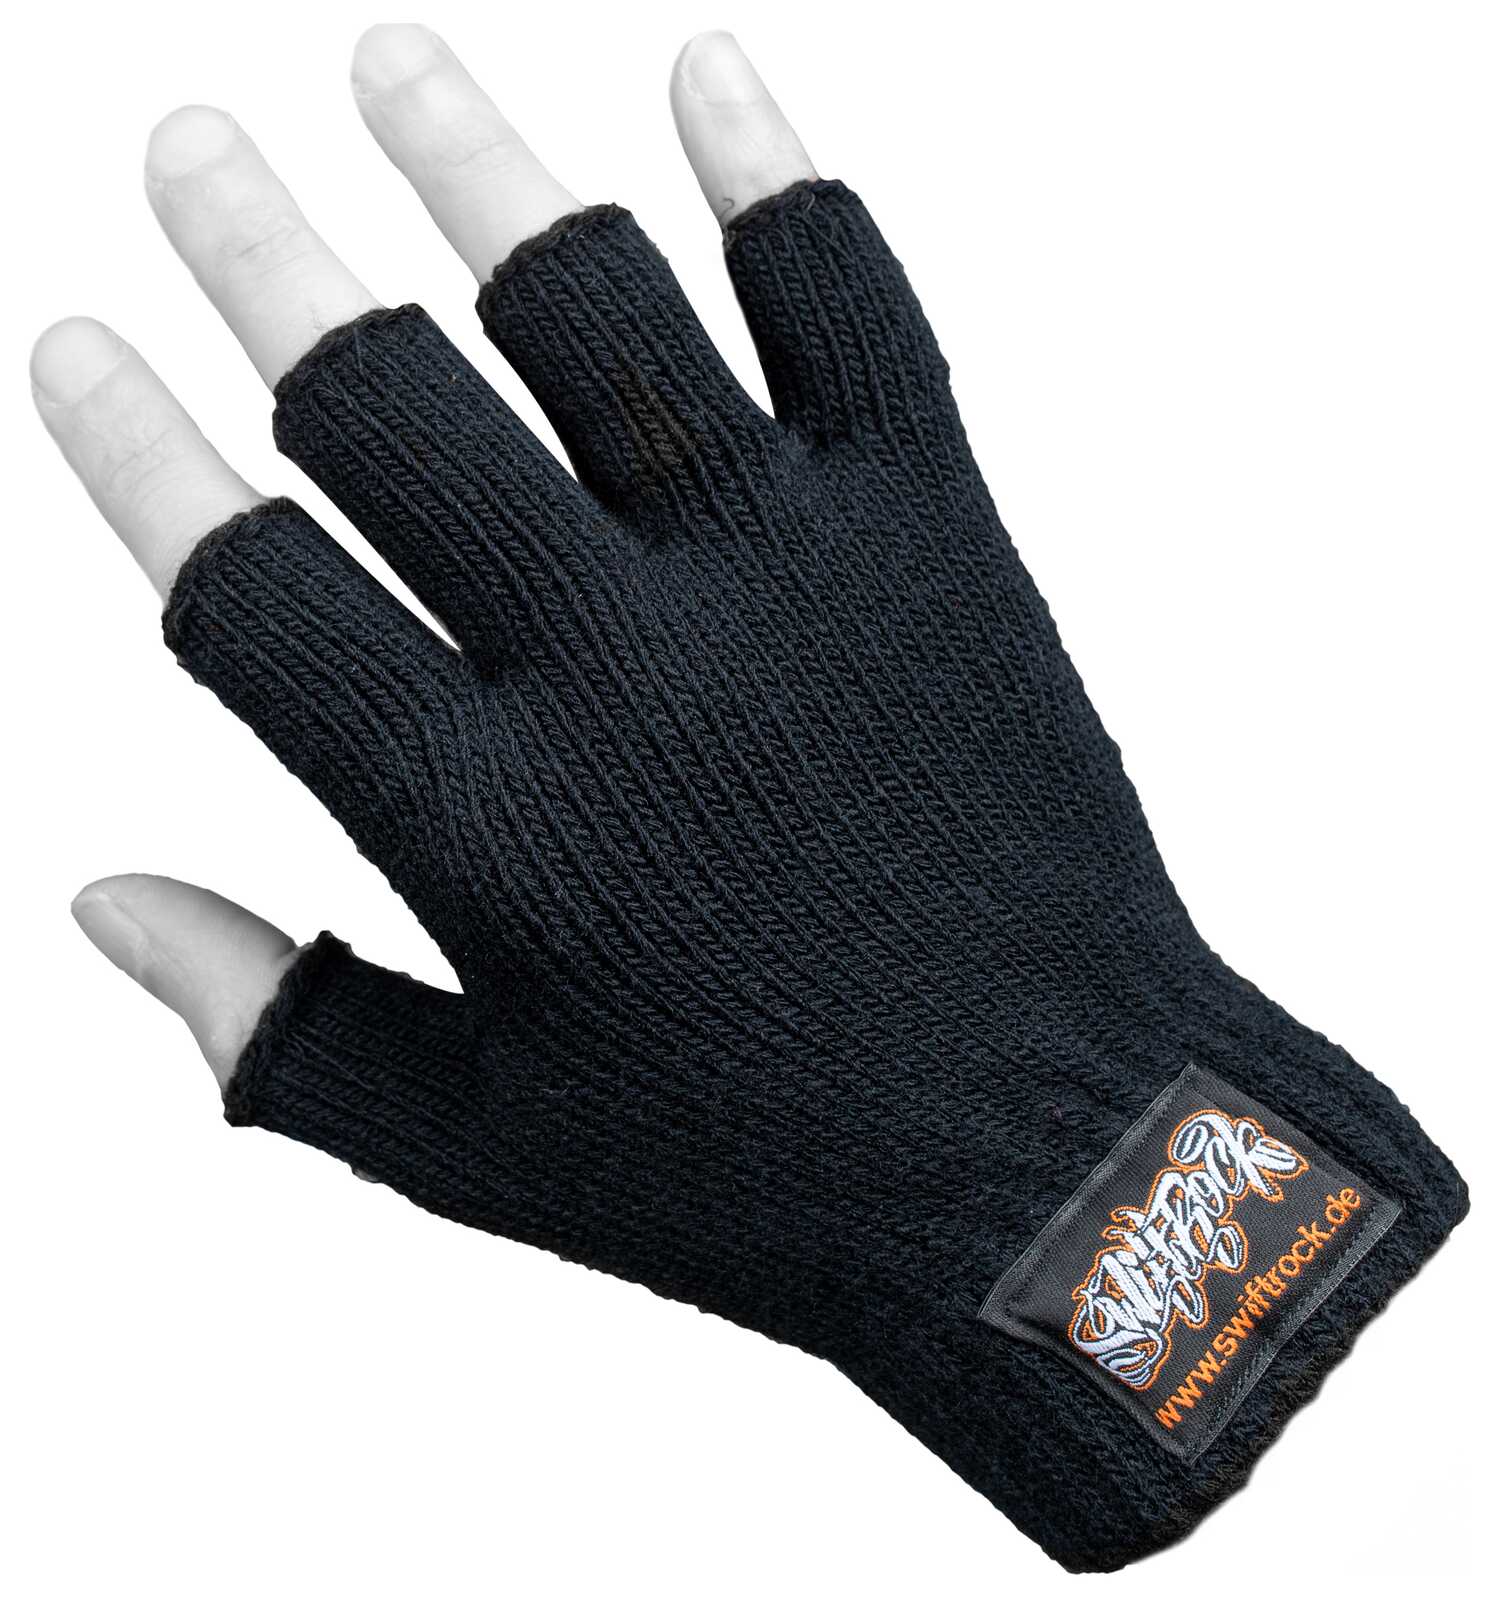 SR Rocking Gear - Swift Rock Spin Glove - Handschuh